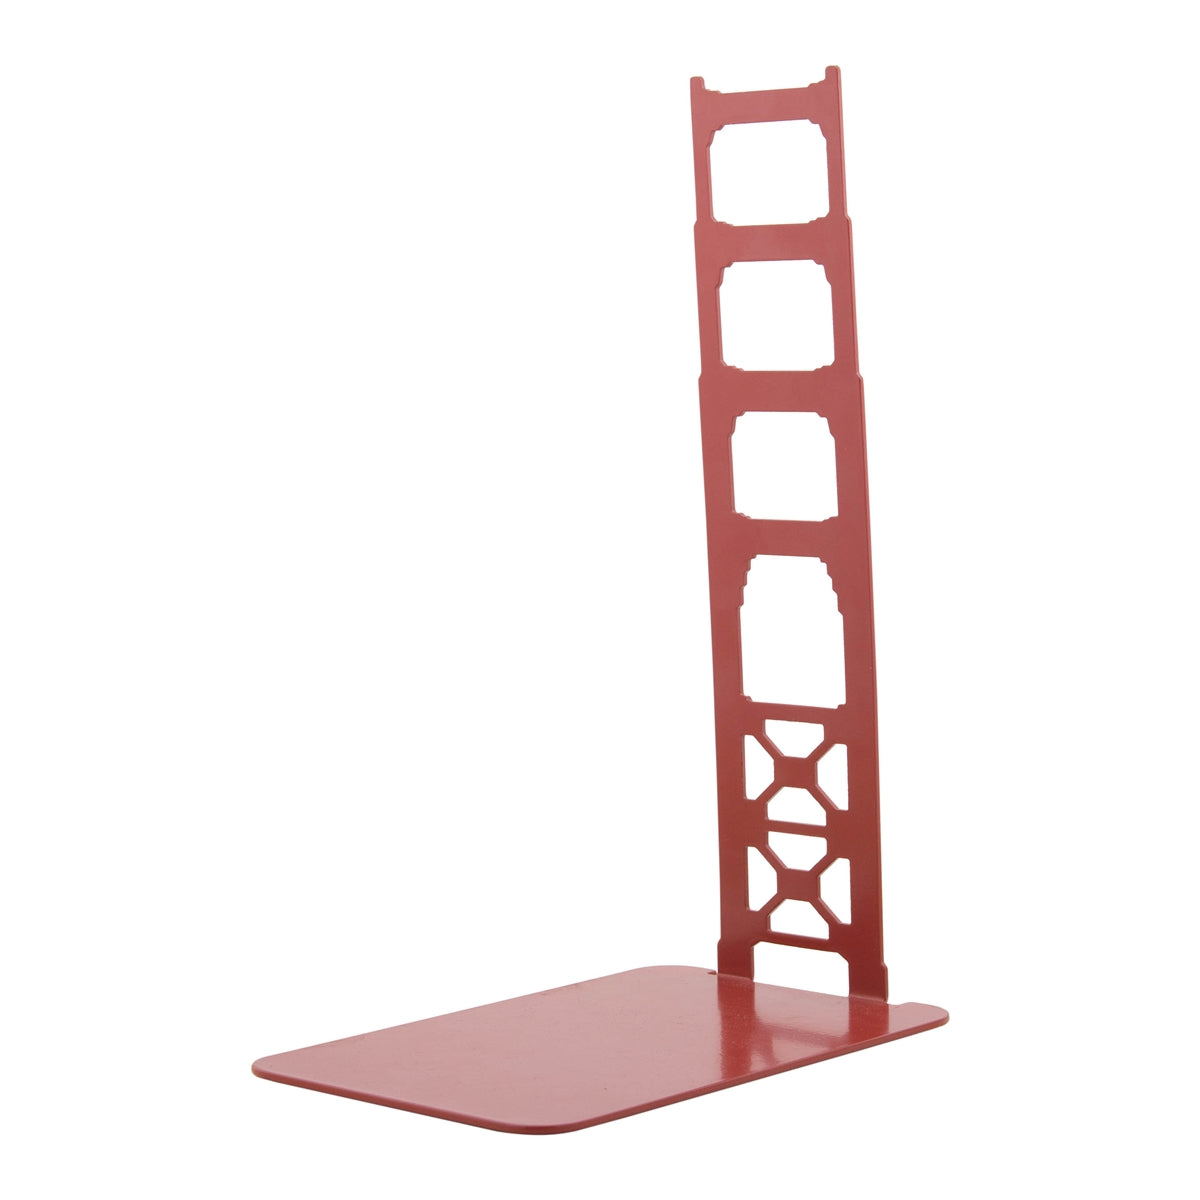 Set of 2 Golden Gate Bridge Art Deco tower bookends, International Orange coated steel.